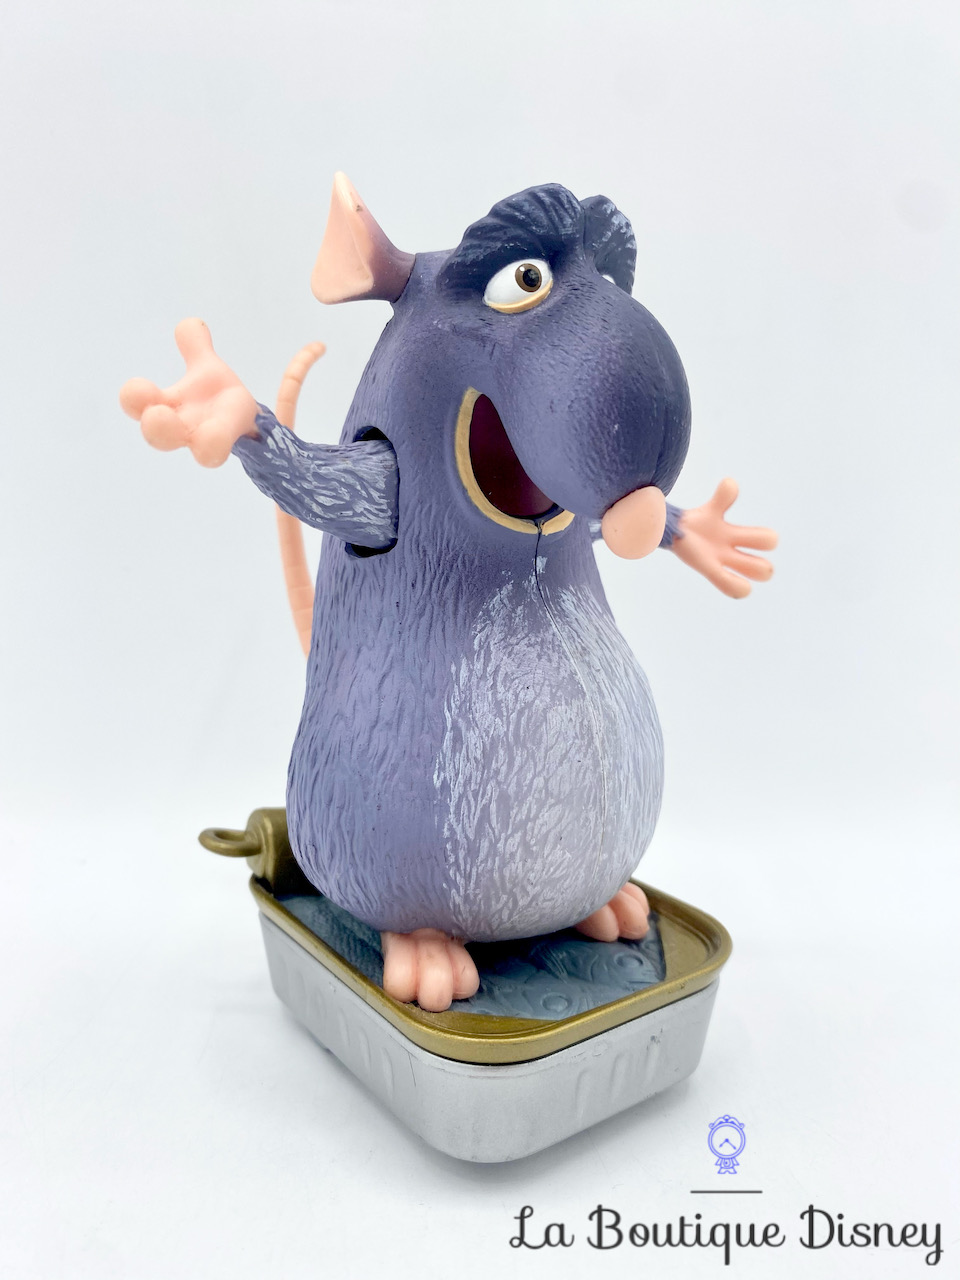 Jouet Figurine Django Ratatouille Disney Pixar Mattel 2007 rat bleu boite conserve